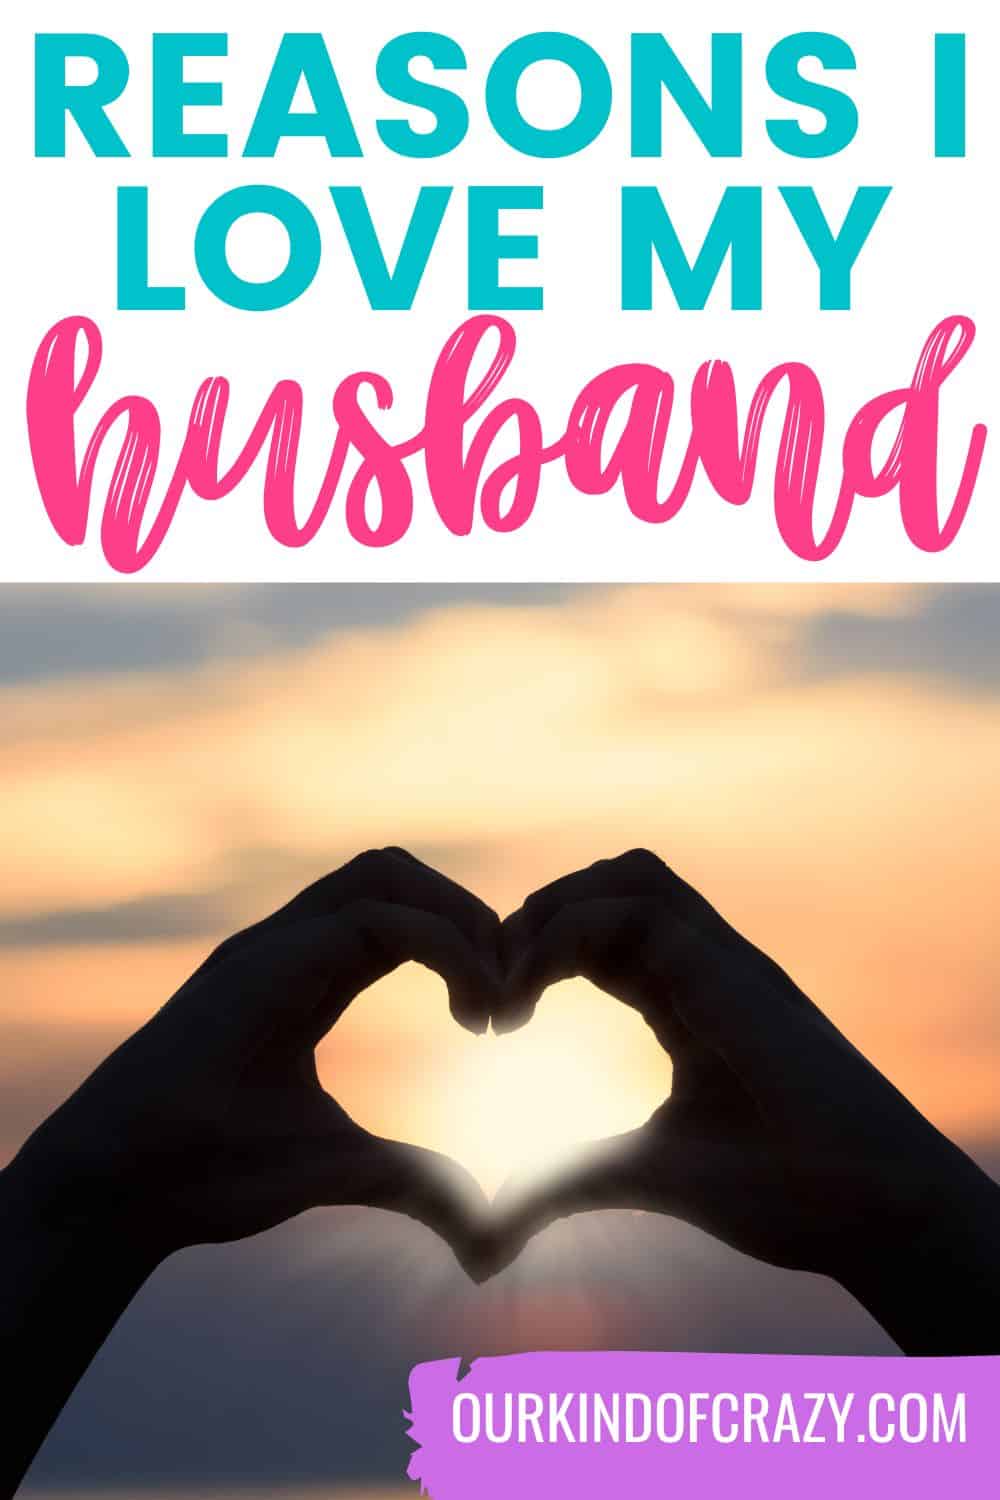 101 Reasons I Love My Husband